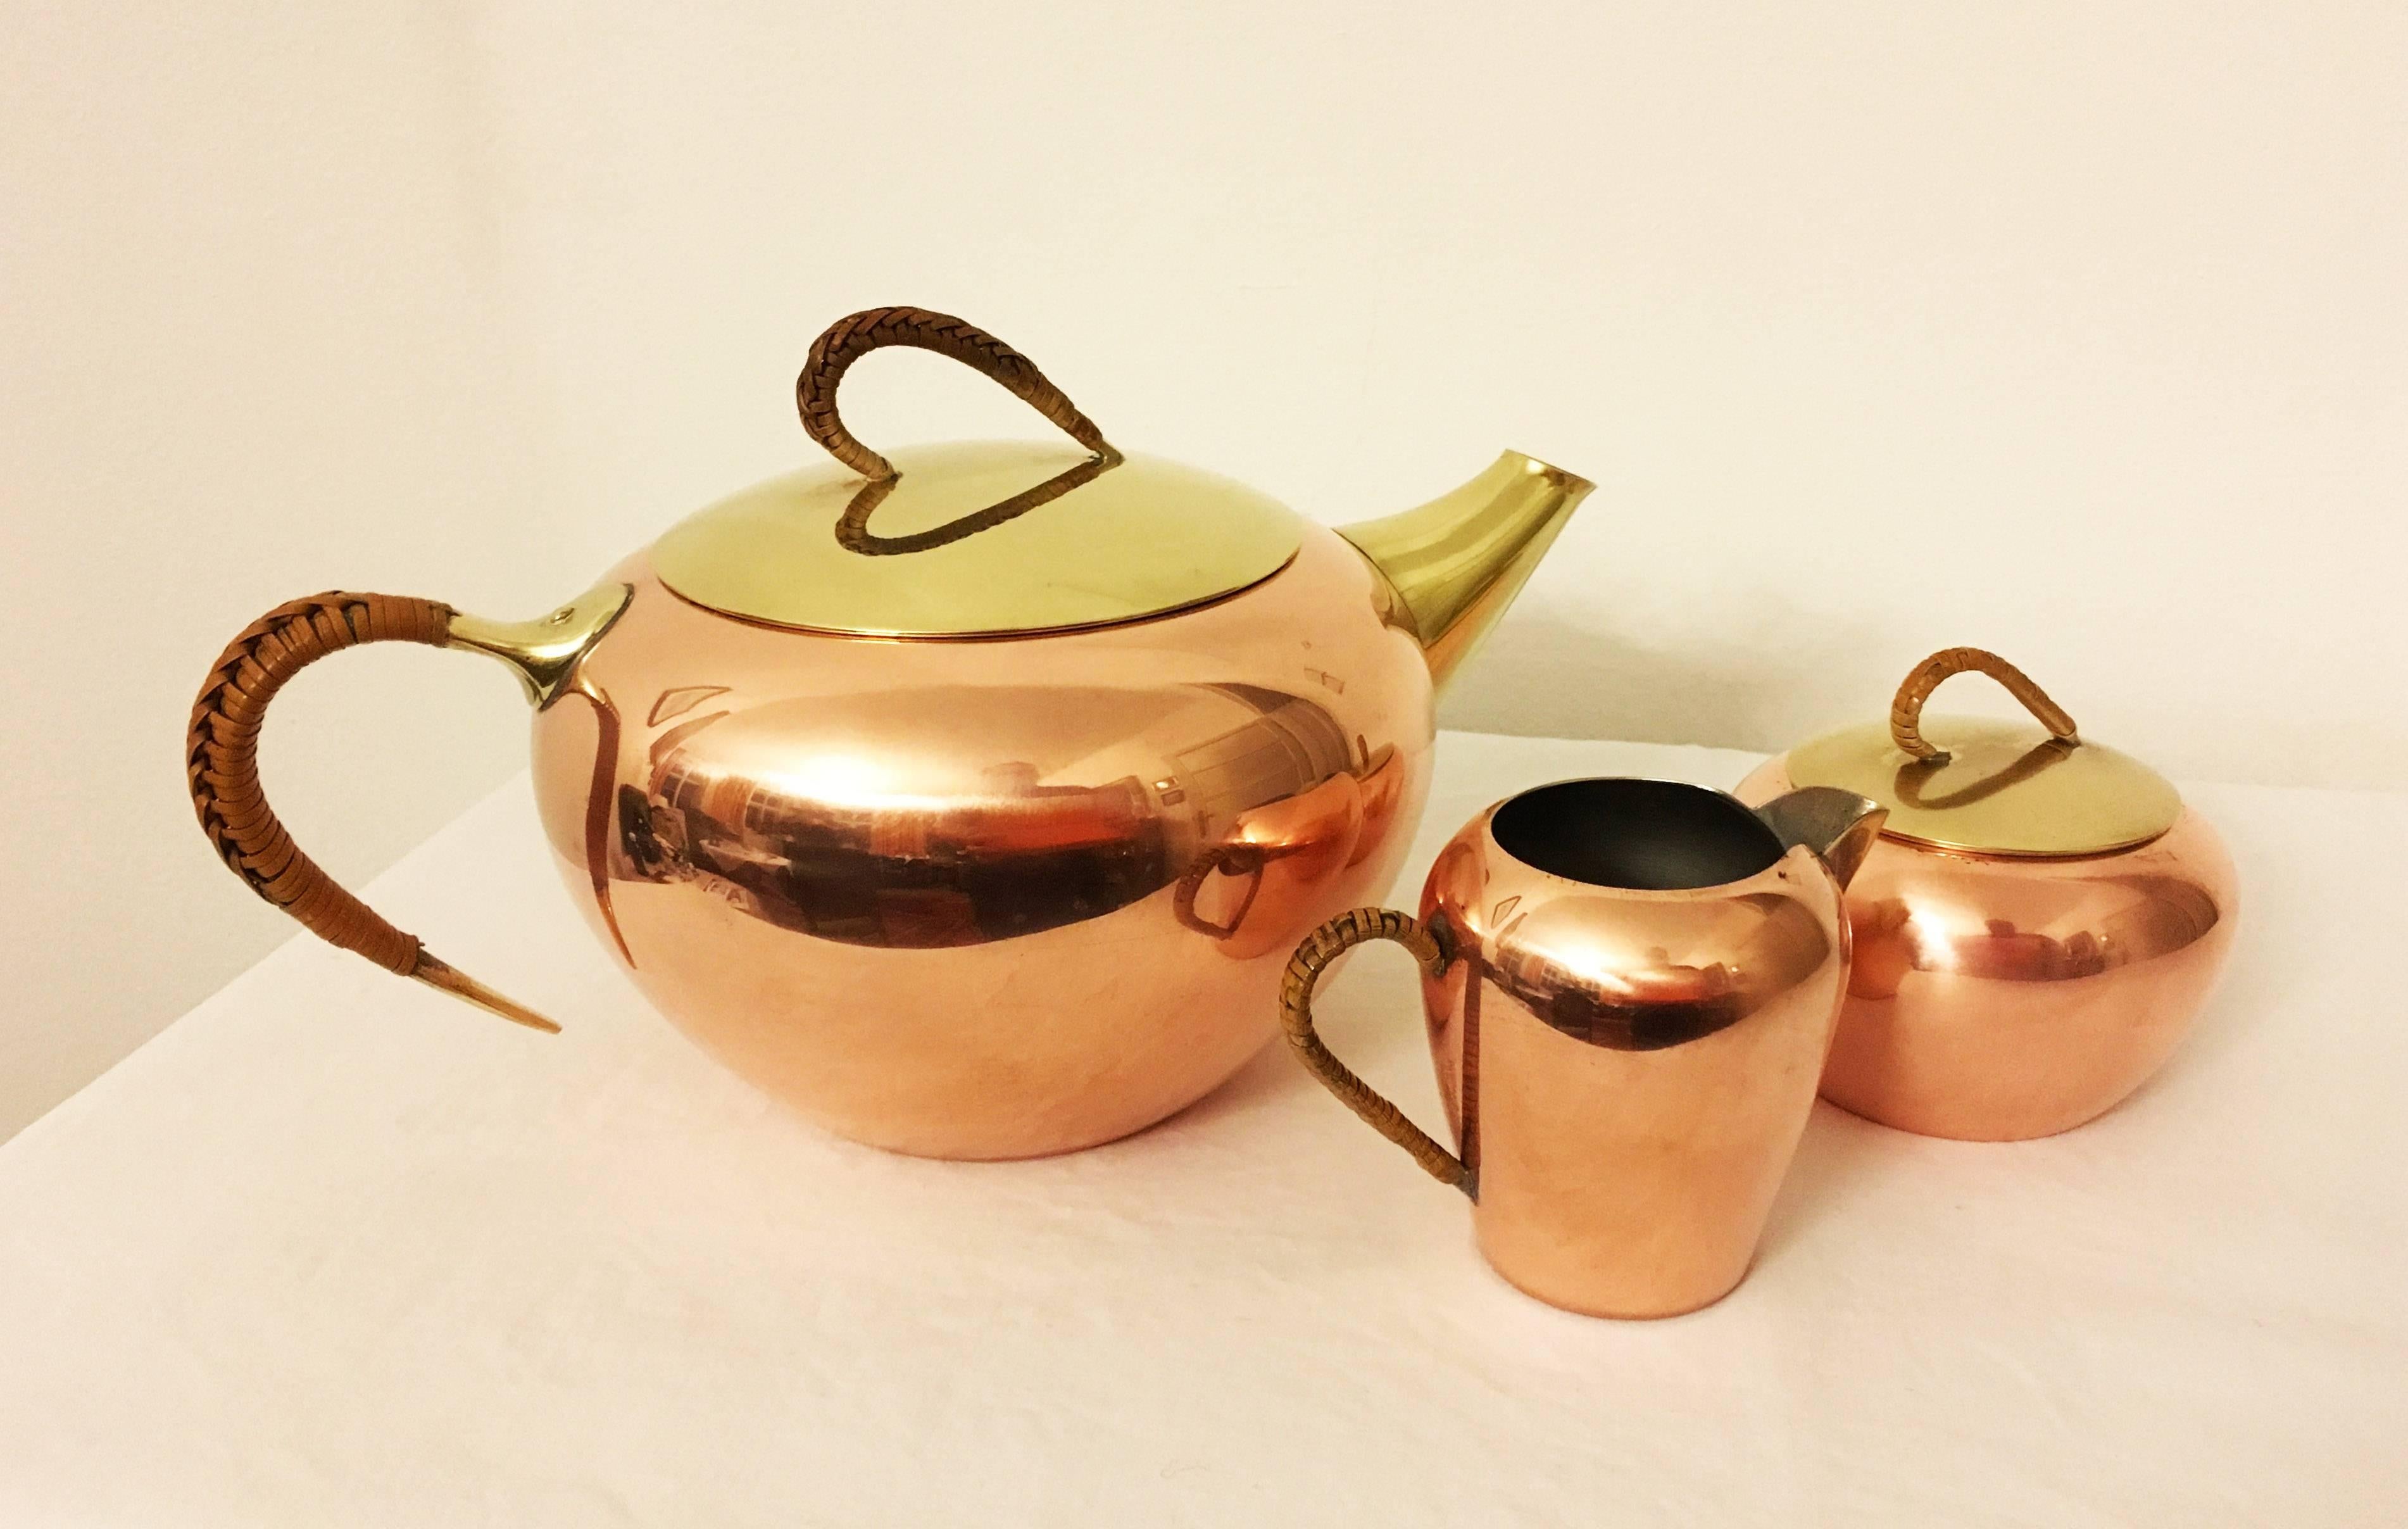 Copper or brass set of a tea pot, milk creamer and a sugar bowl made by Erich Kolbenheyer for EKW Austria in the 1950s.
Dimensions:
Pot: W 37cm (14.56"), D 17cm (6.69"), H 16cm (6.30").
Cramer: W 7cm (2.75"), D 11cm